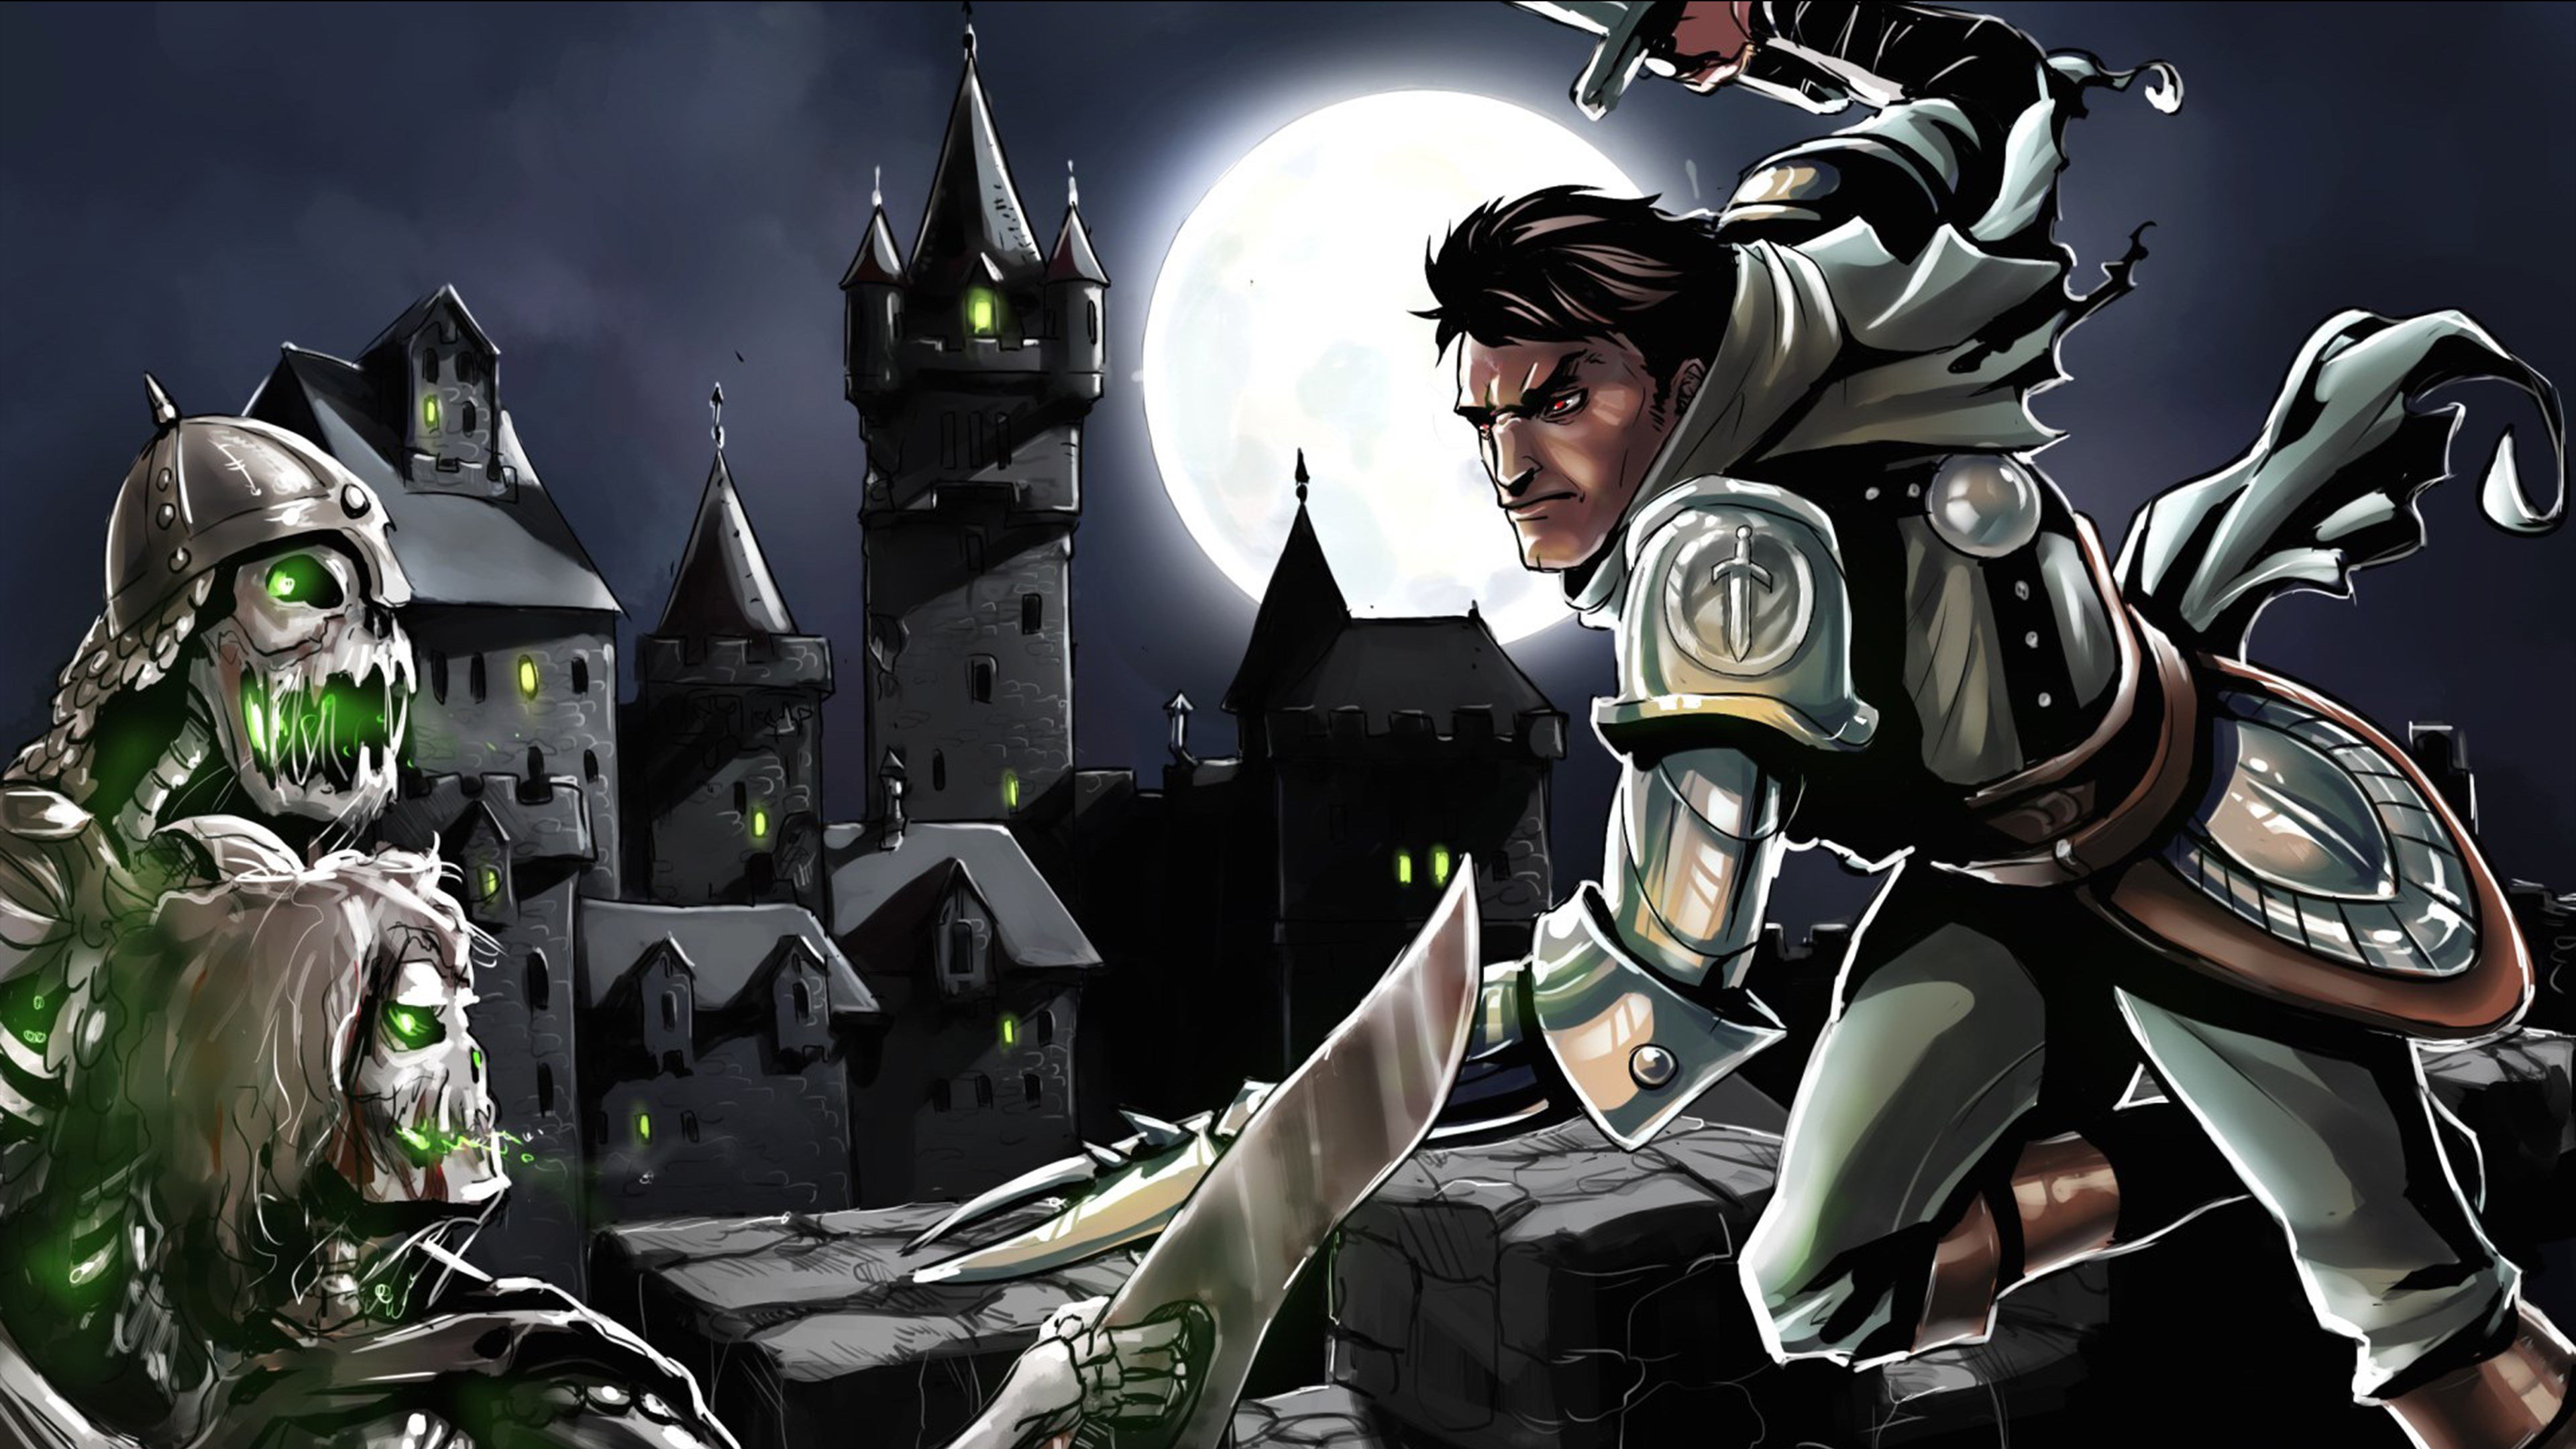 Swordbreaker The Game cover image